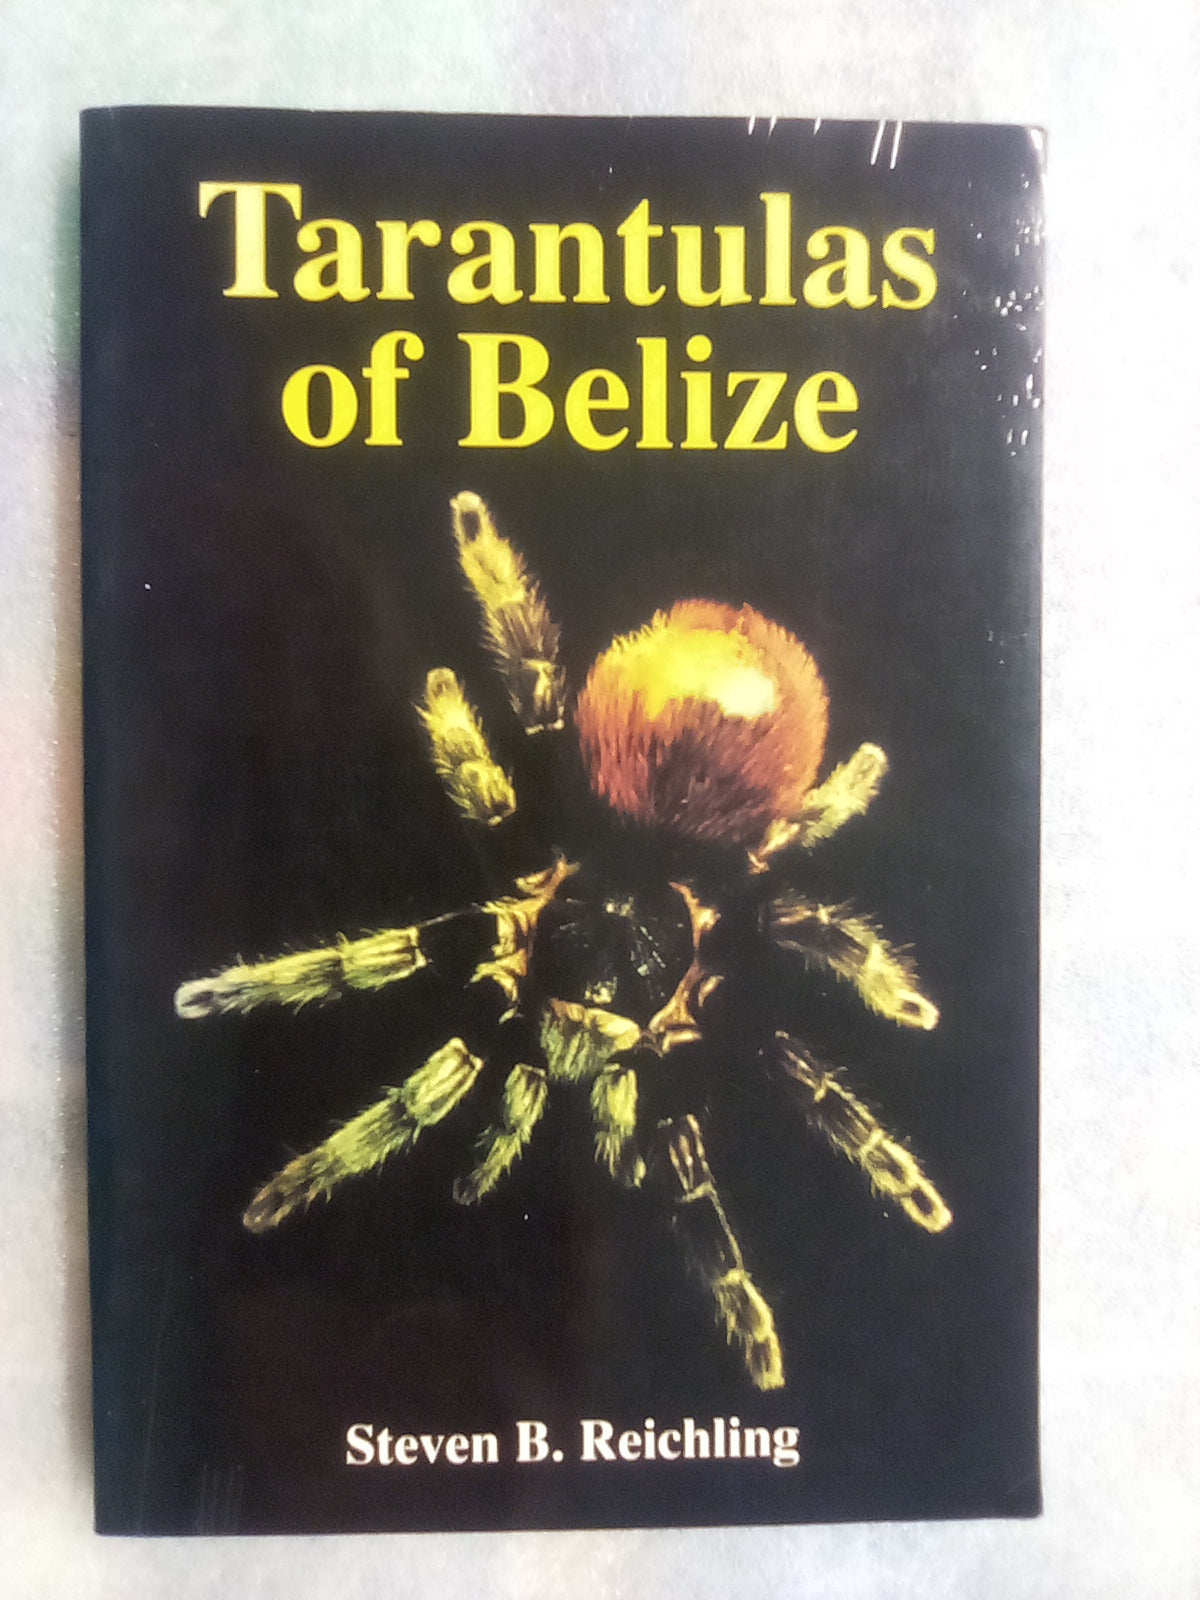 Tarantulas of Belize by Steven Reichling